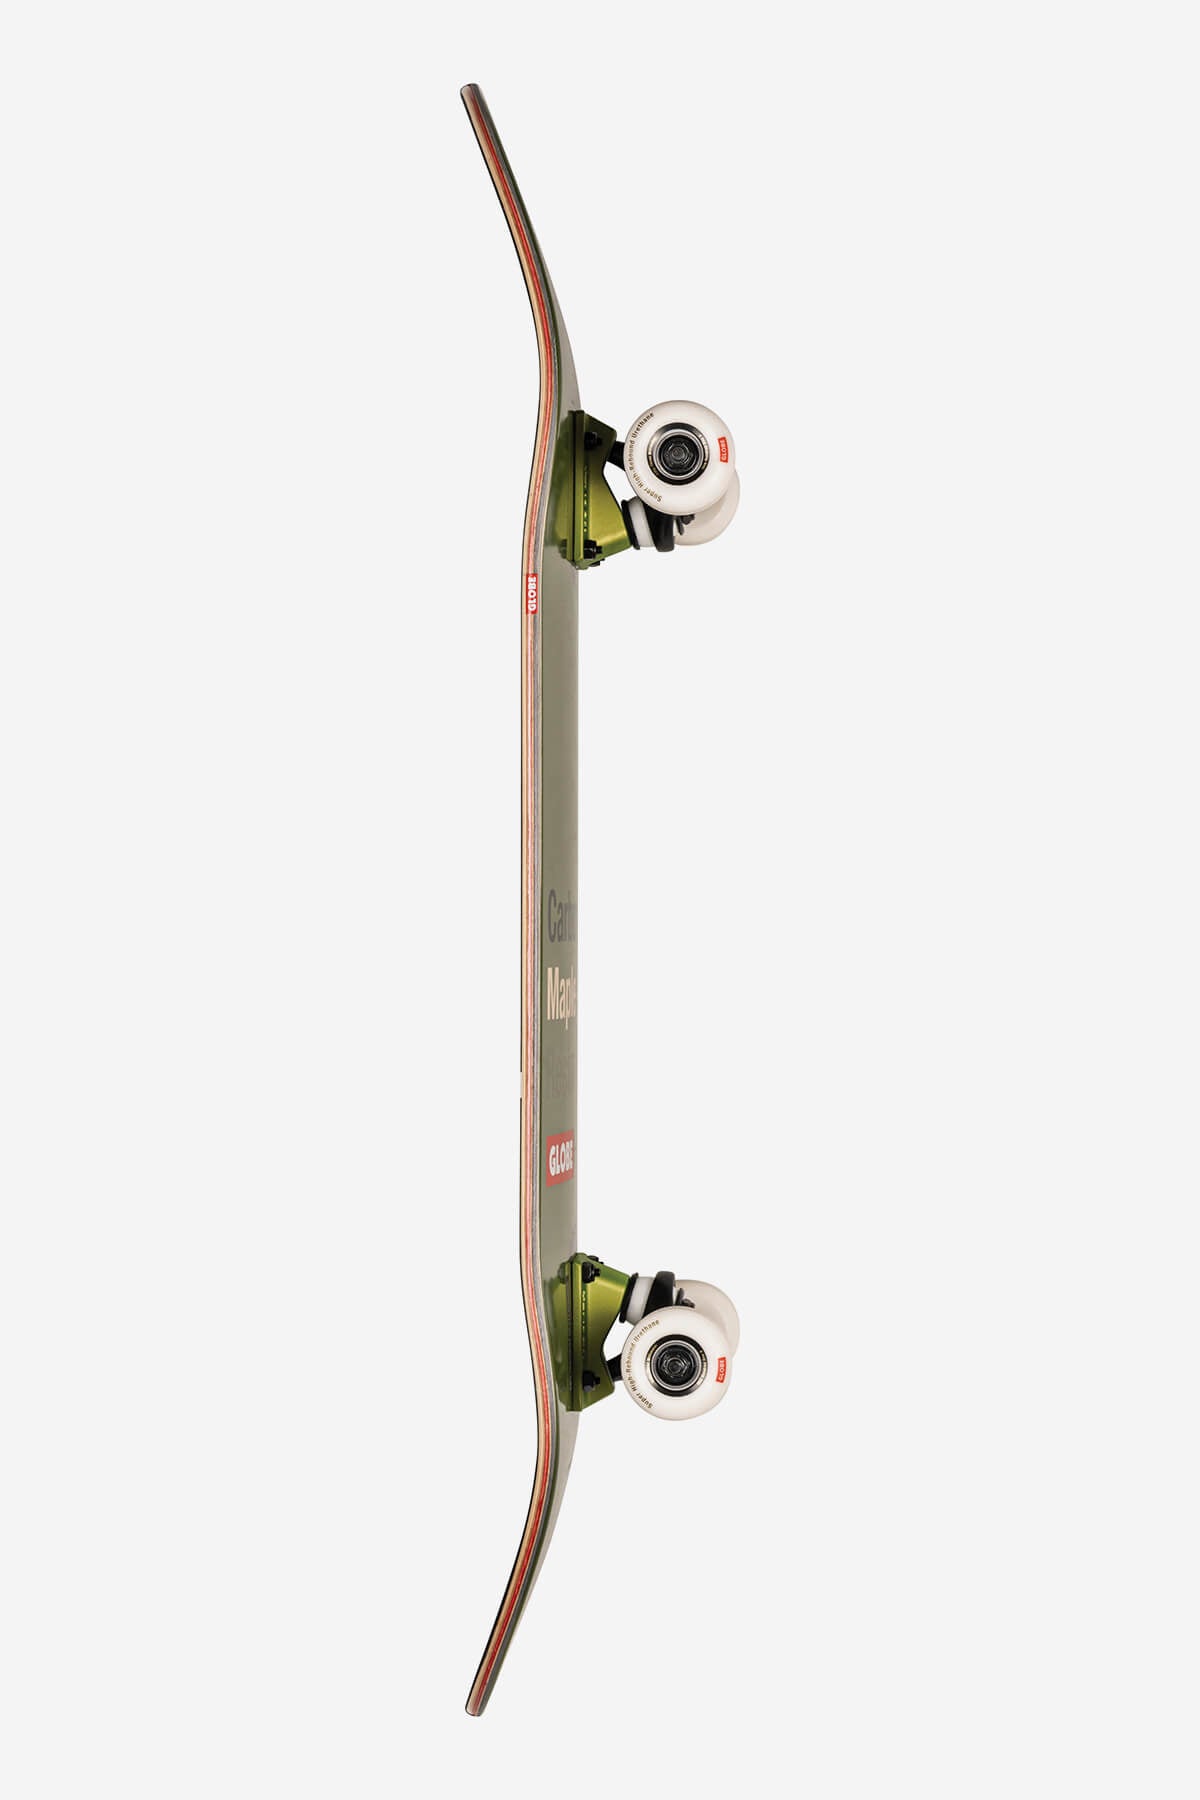 Globe Skateboard completa G3 Bar 8.0" Completa Skateboard en Impact/Olive